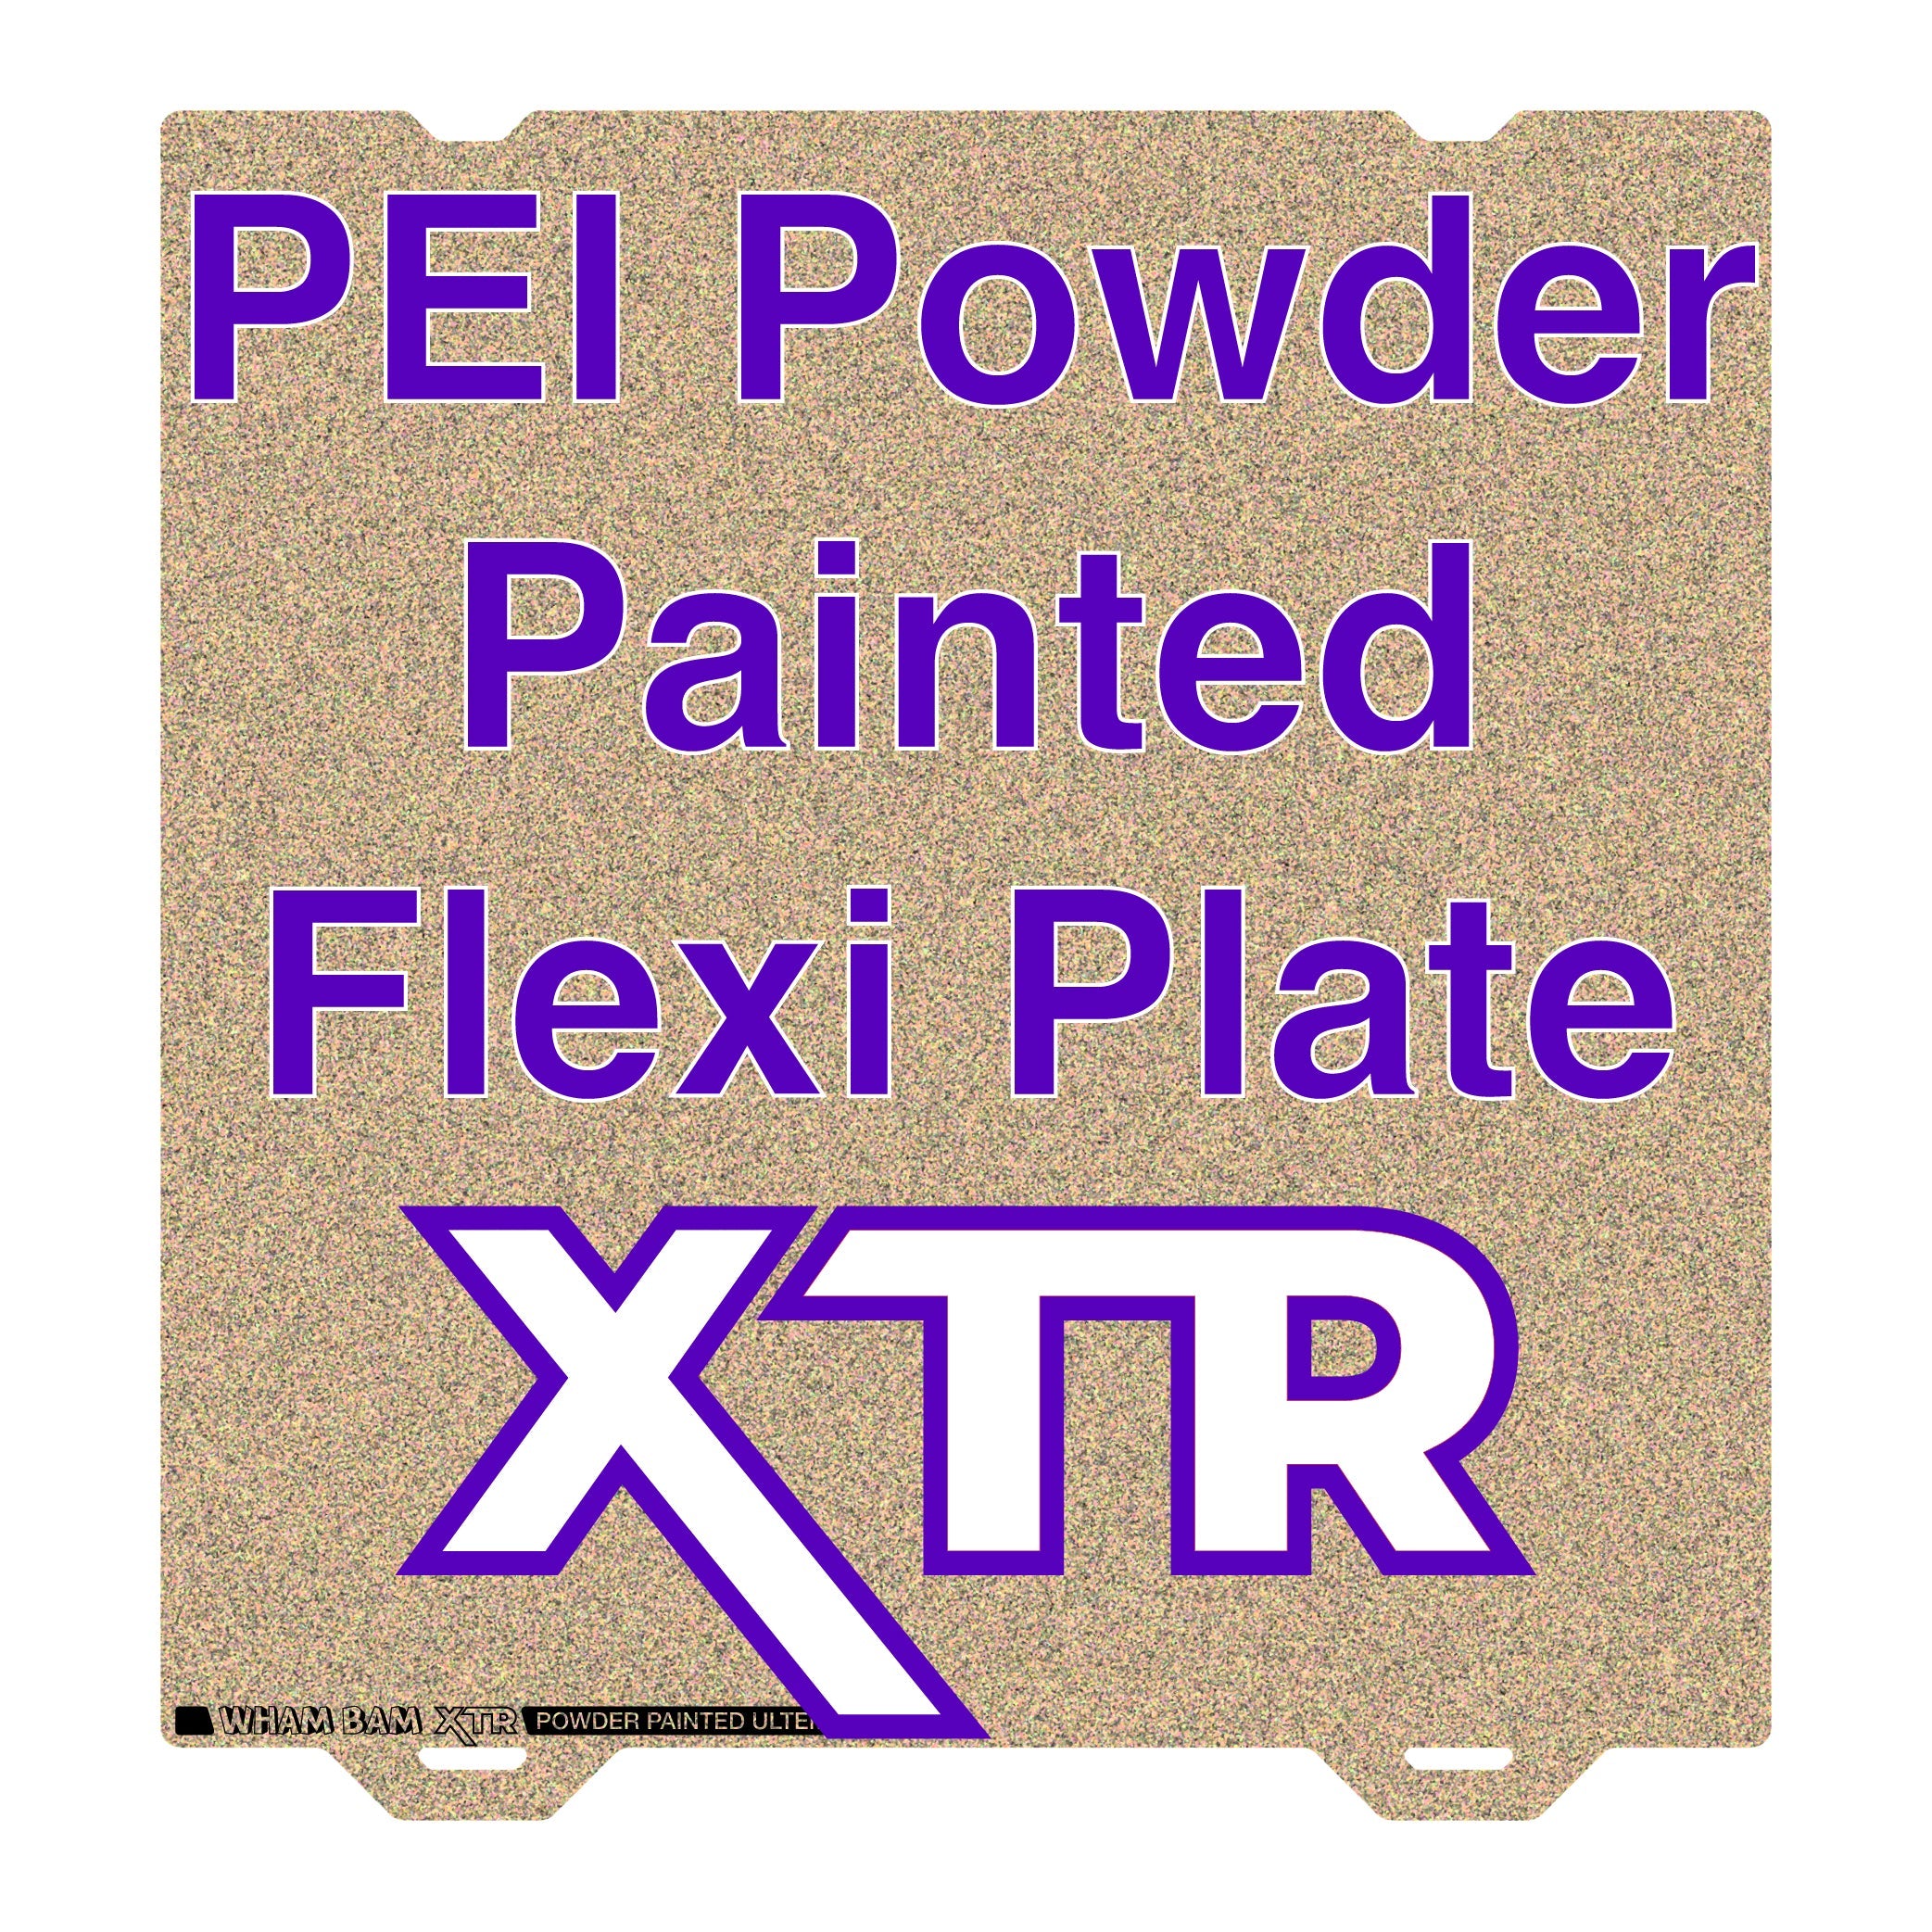 XTR Powder Painted PEI Flexi Plate - 315 x 310 - Creality K1 Max